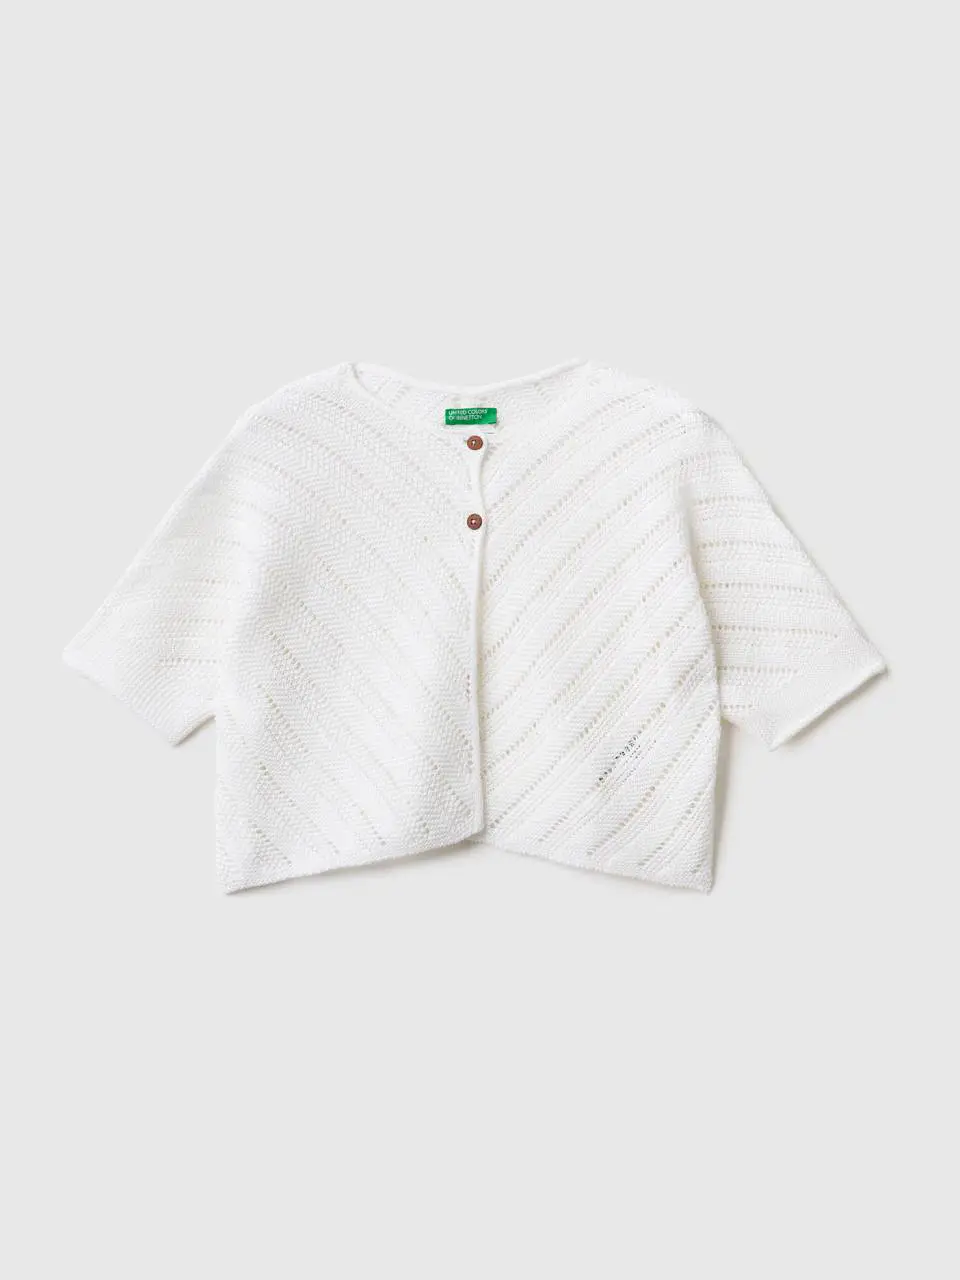 Benetton open-knit cardigan in linen blend. 1